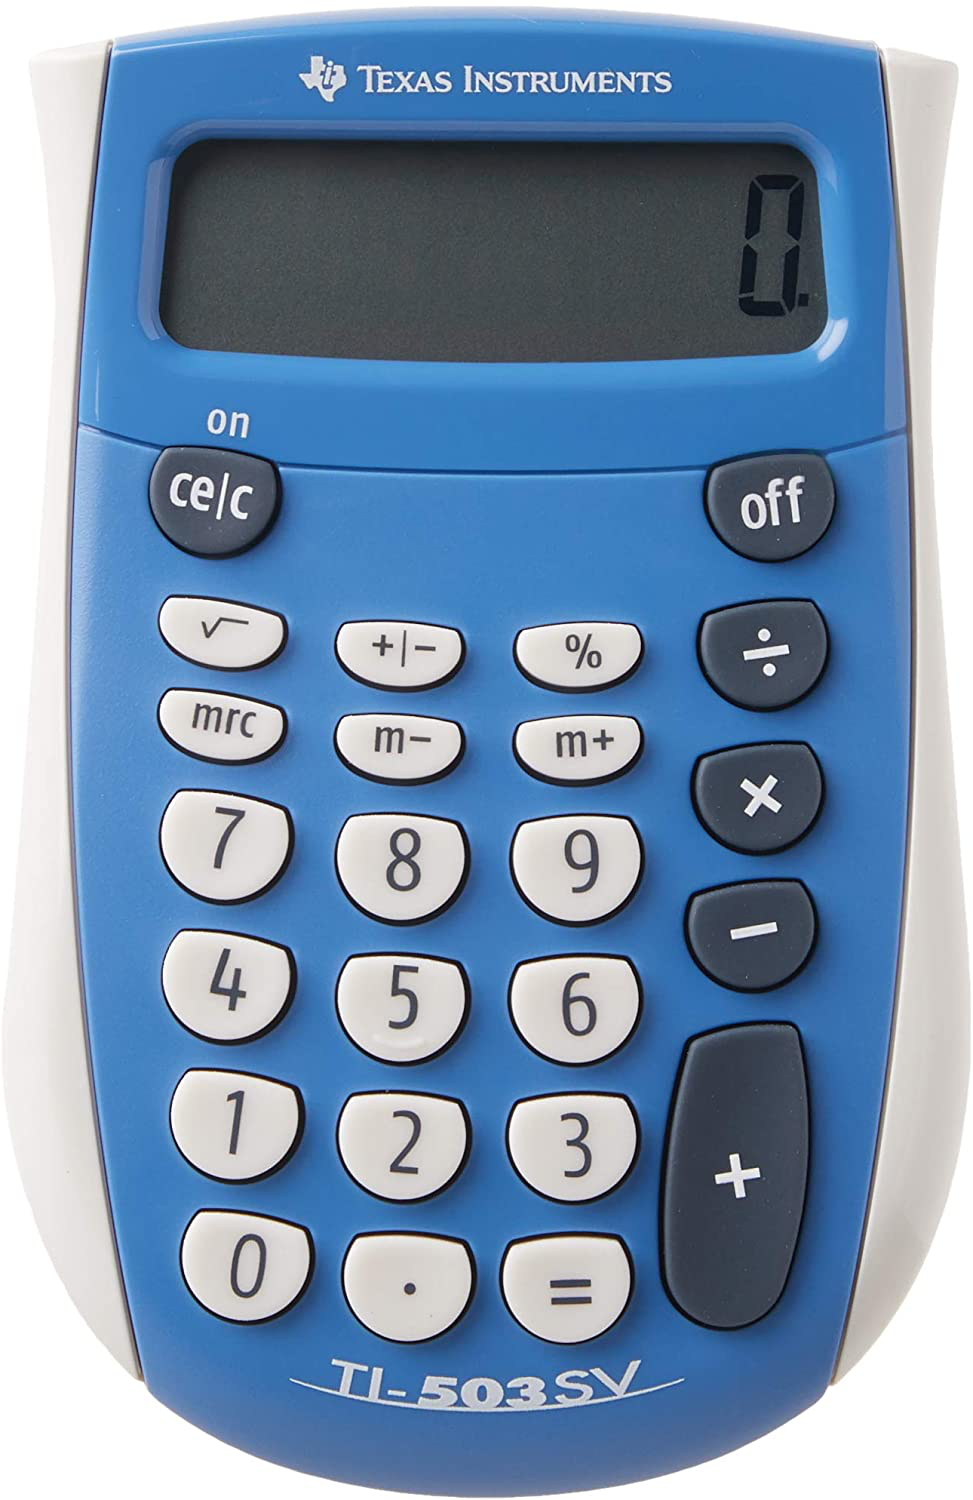 Texas Instruments TI-503 SV Standard Function Calculator